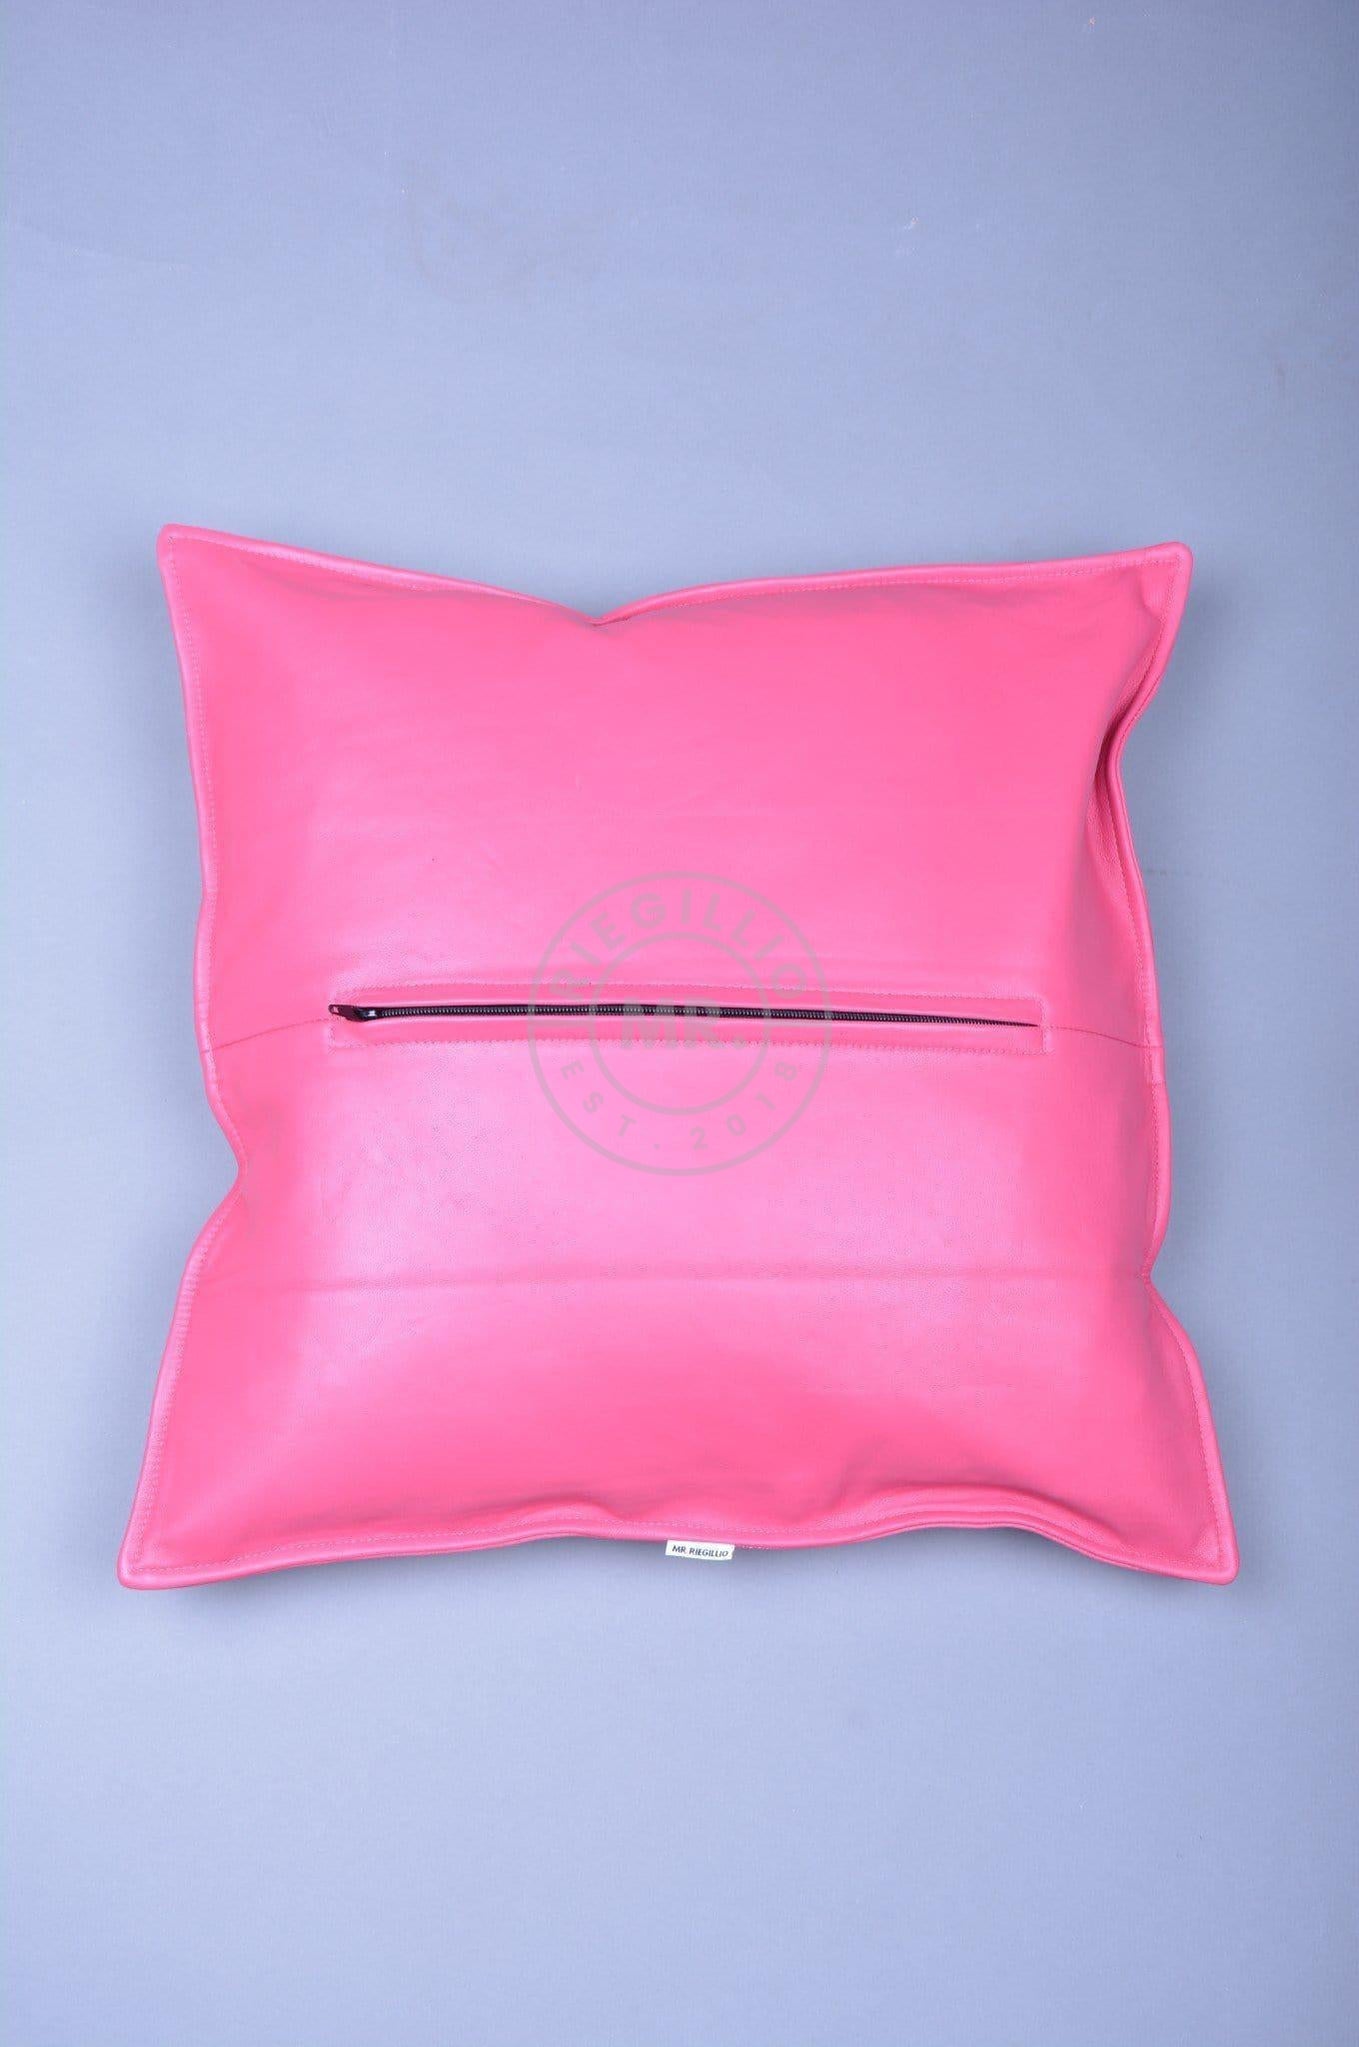 Pink Leather Pillow-at MR. Riegillio